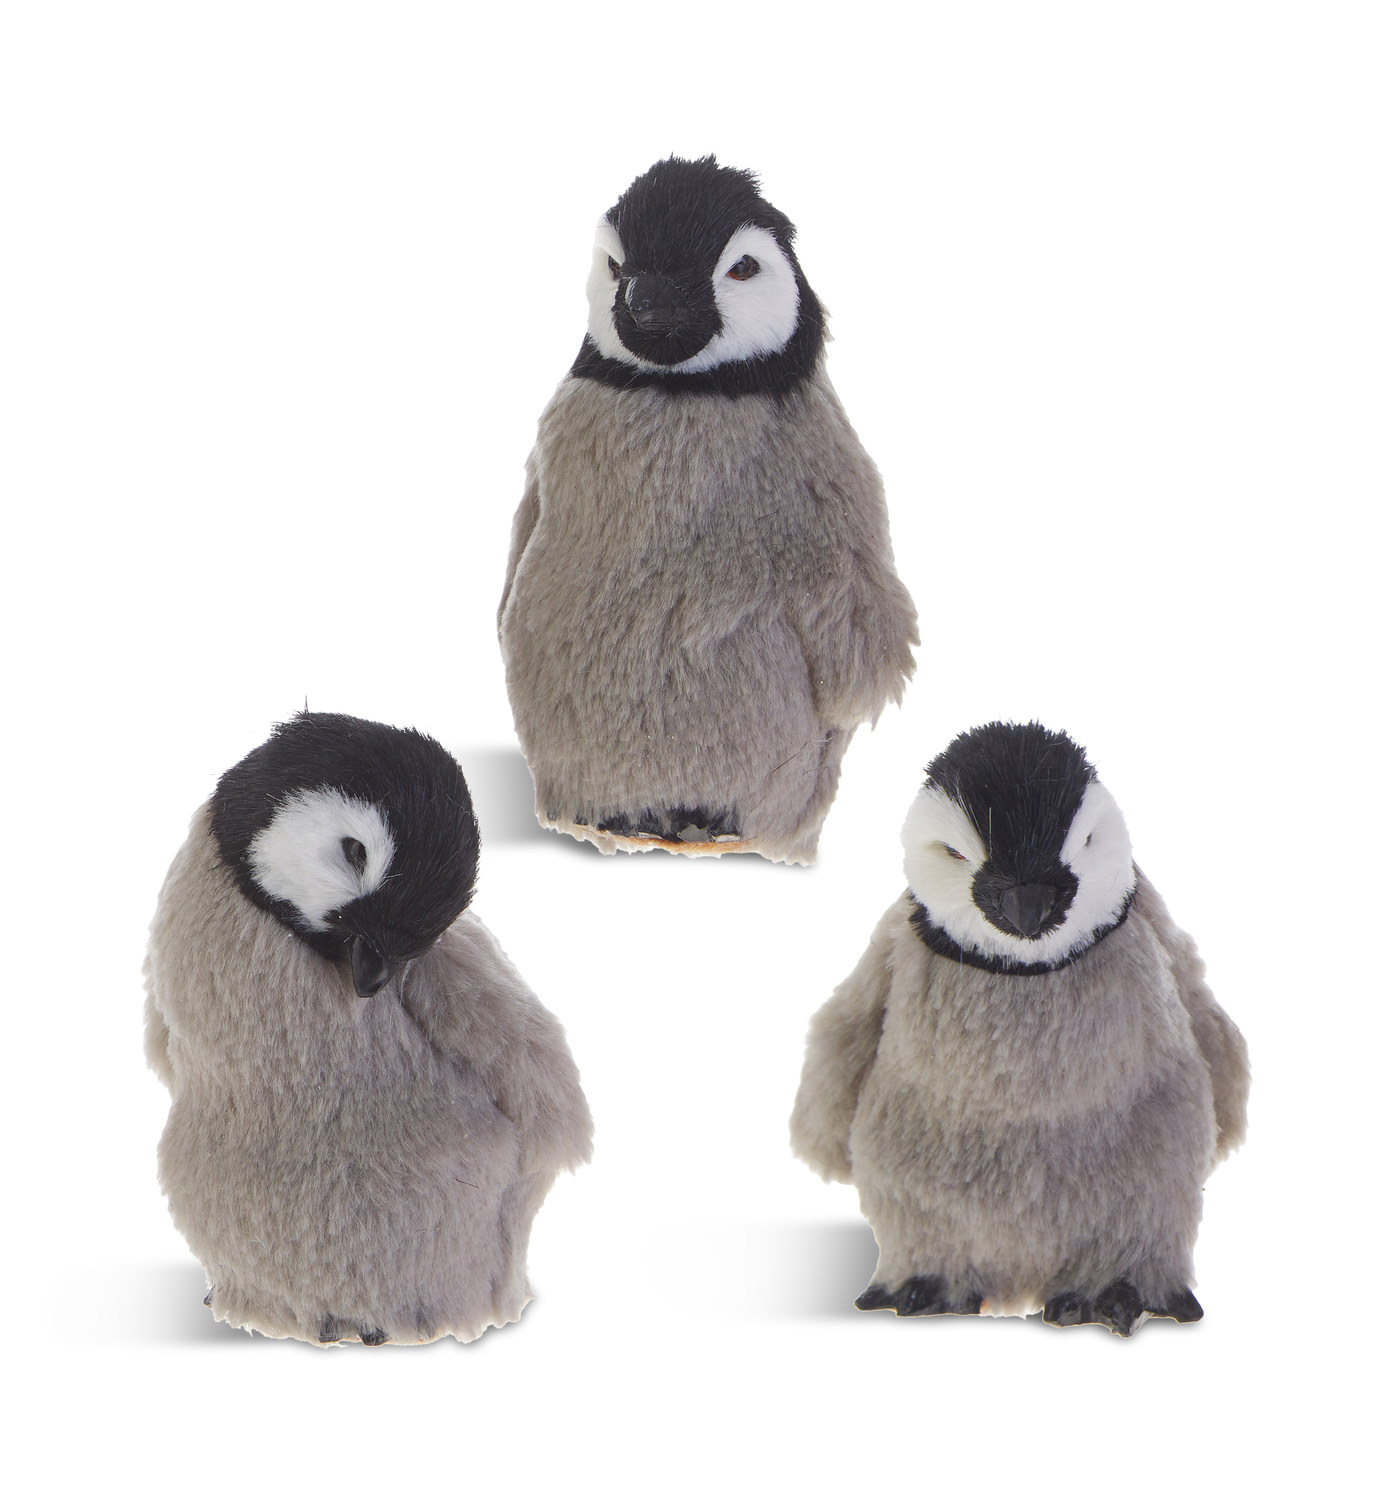 Penguin Rugs Penguin Family Area Rug White and Gray Carpets Winter